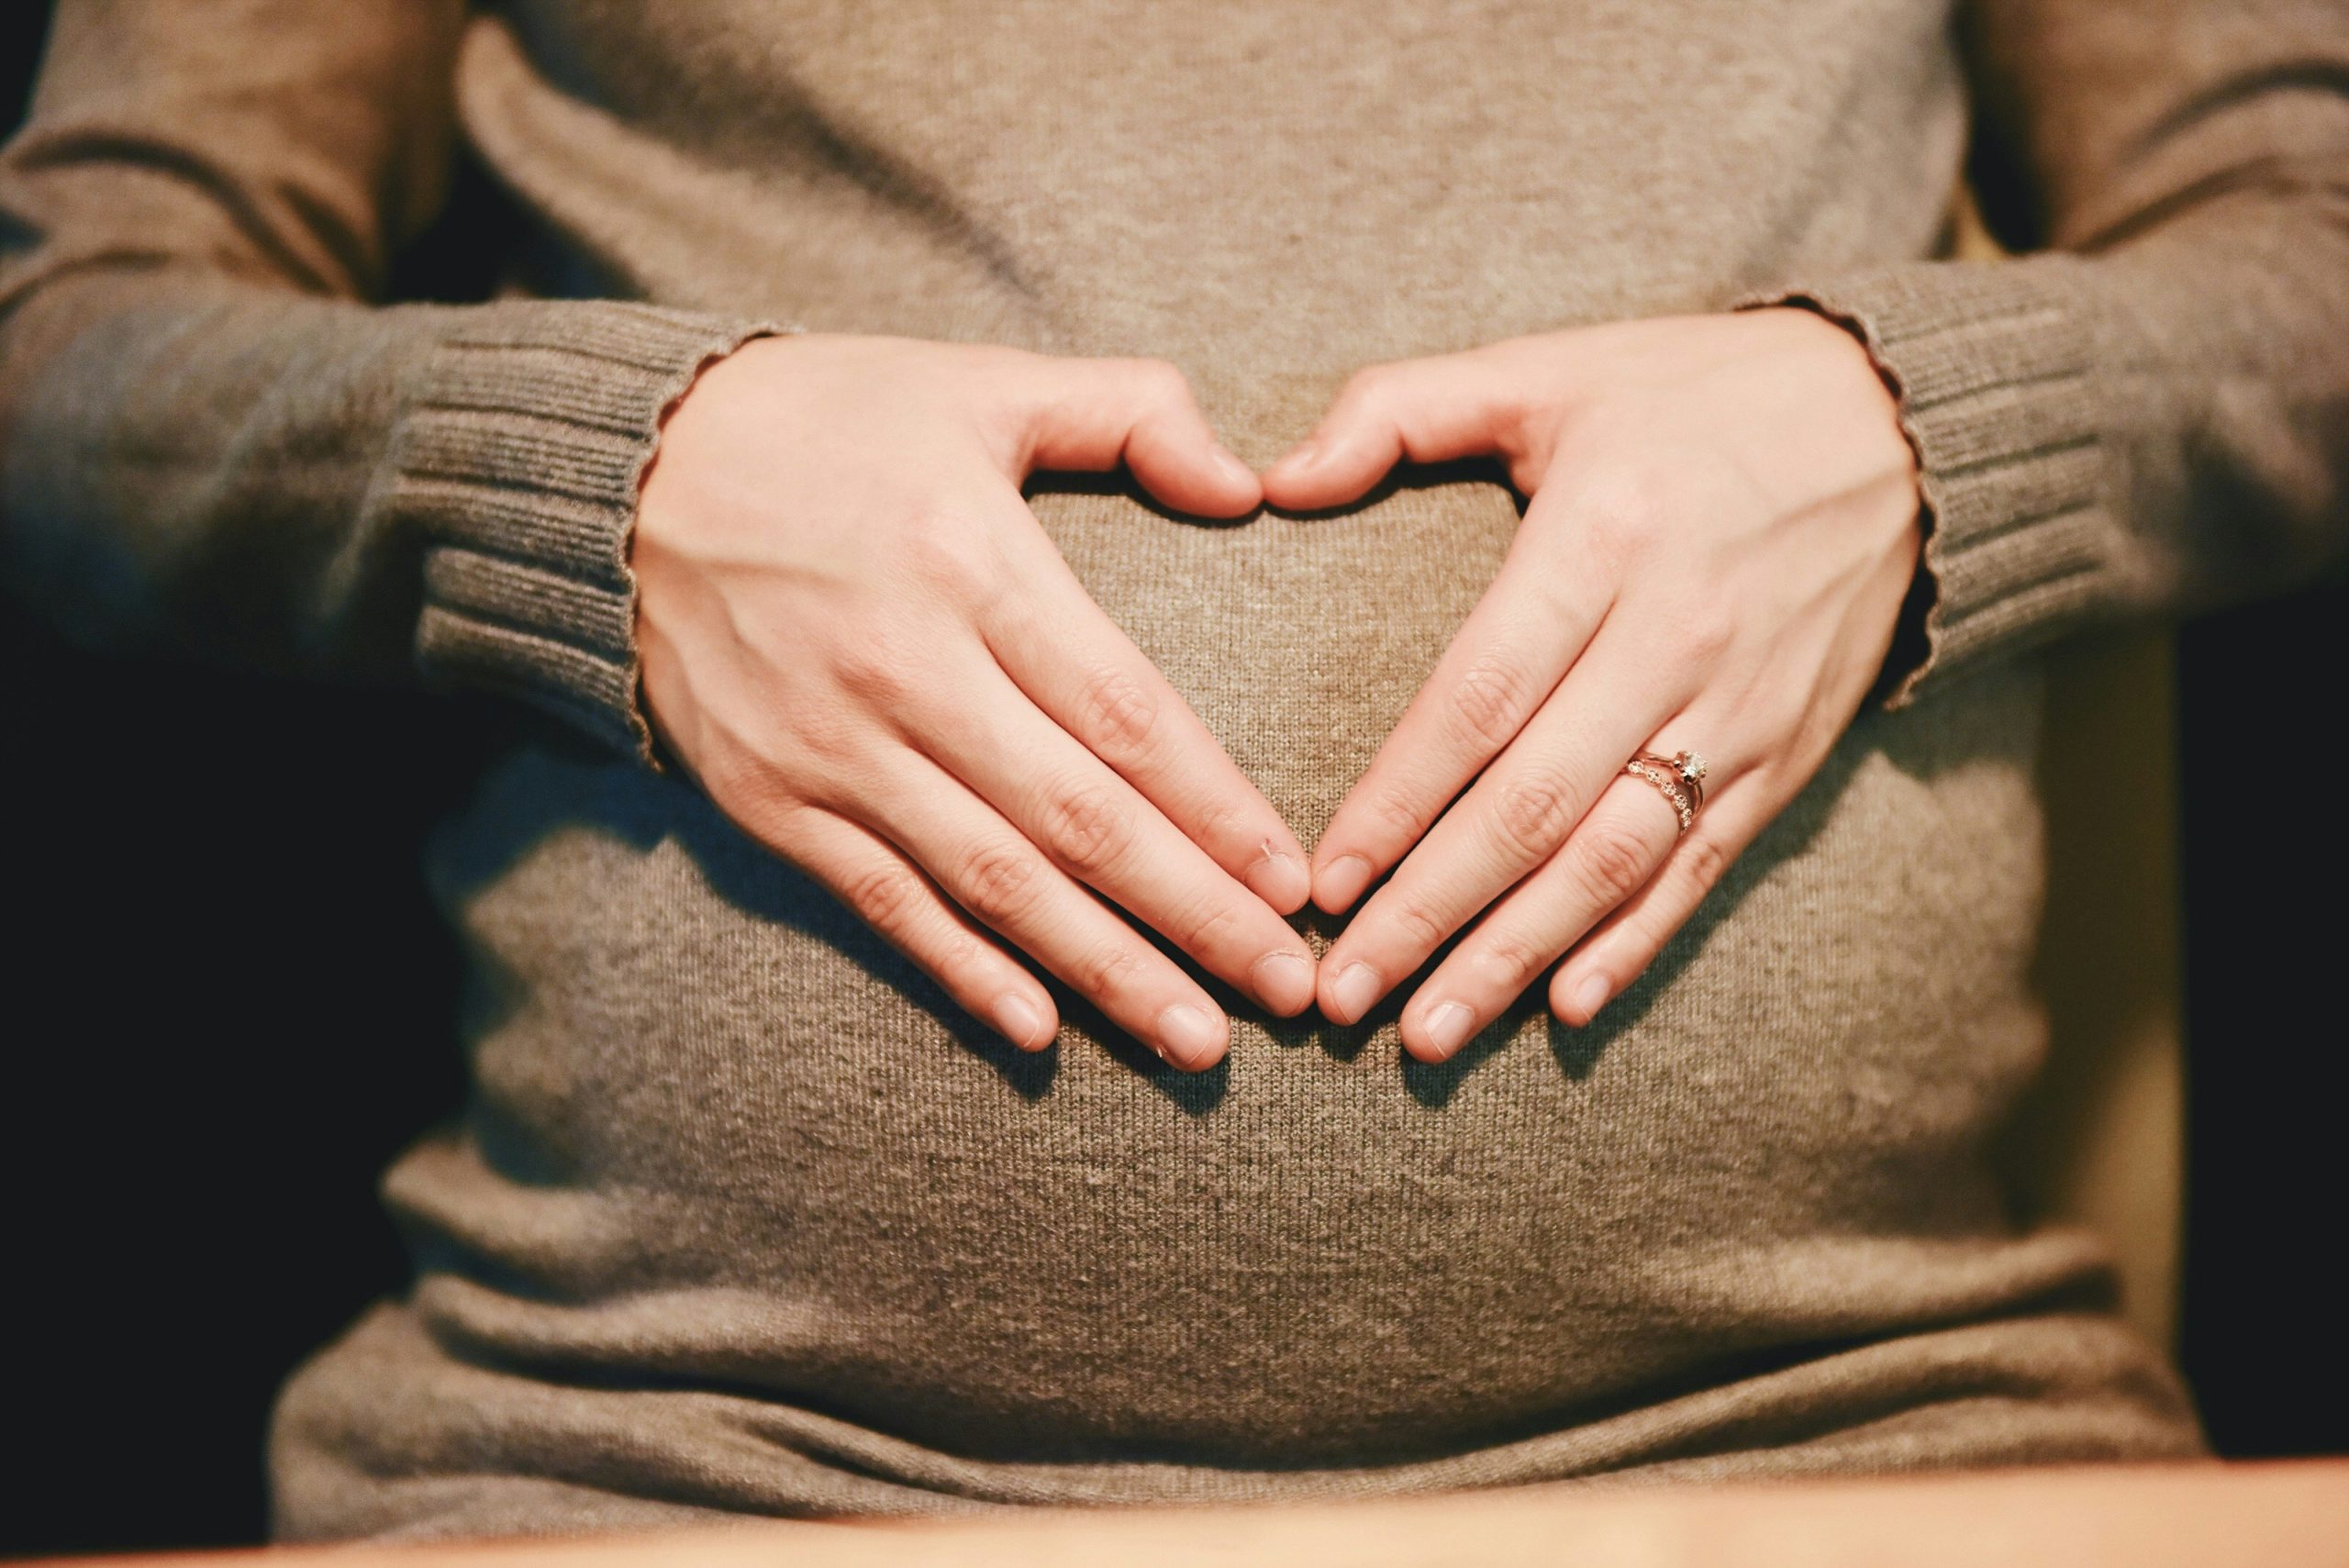 Ask an expert: all things fertility!